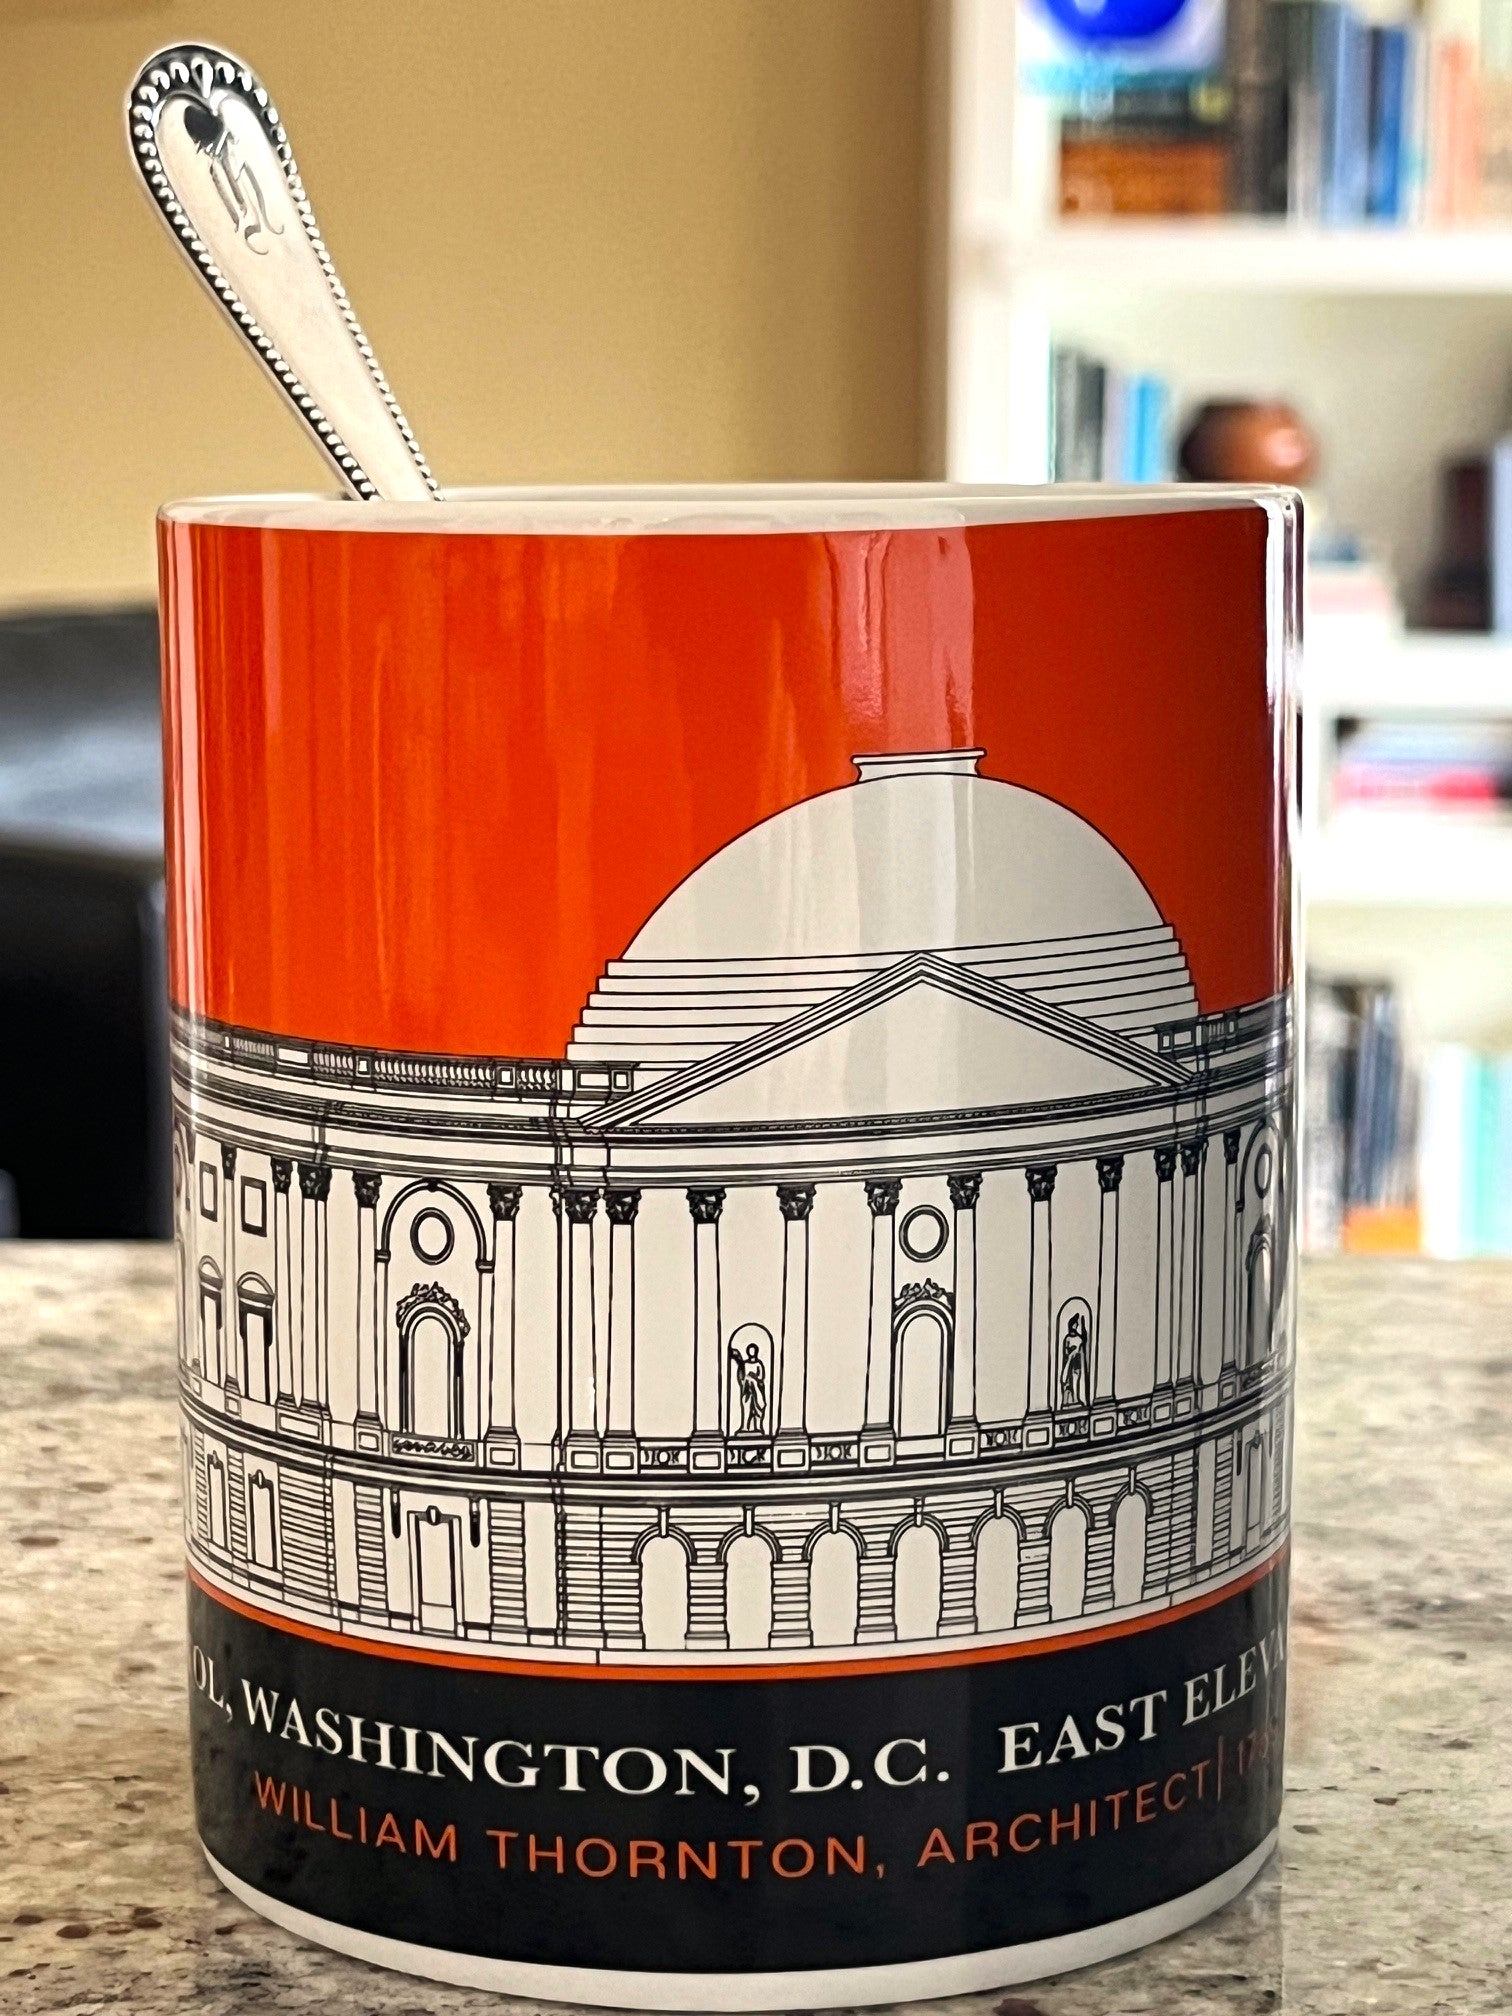 "New Piero" U.S. Capitol Ceramic Mug (Wm. Thornton)